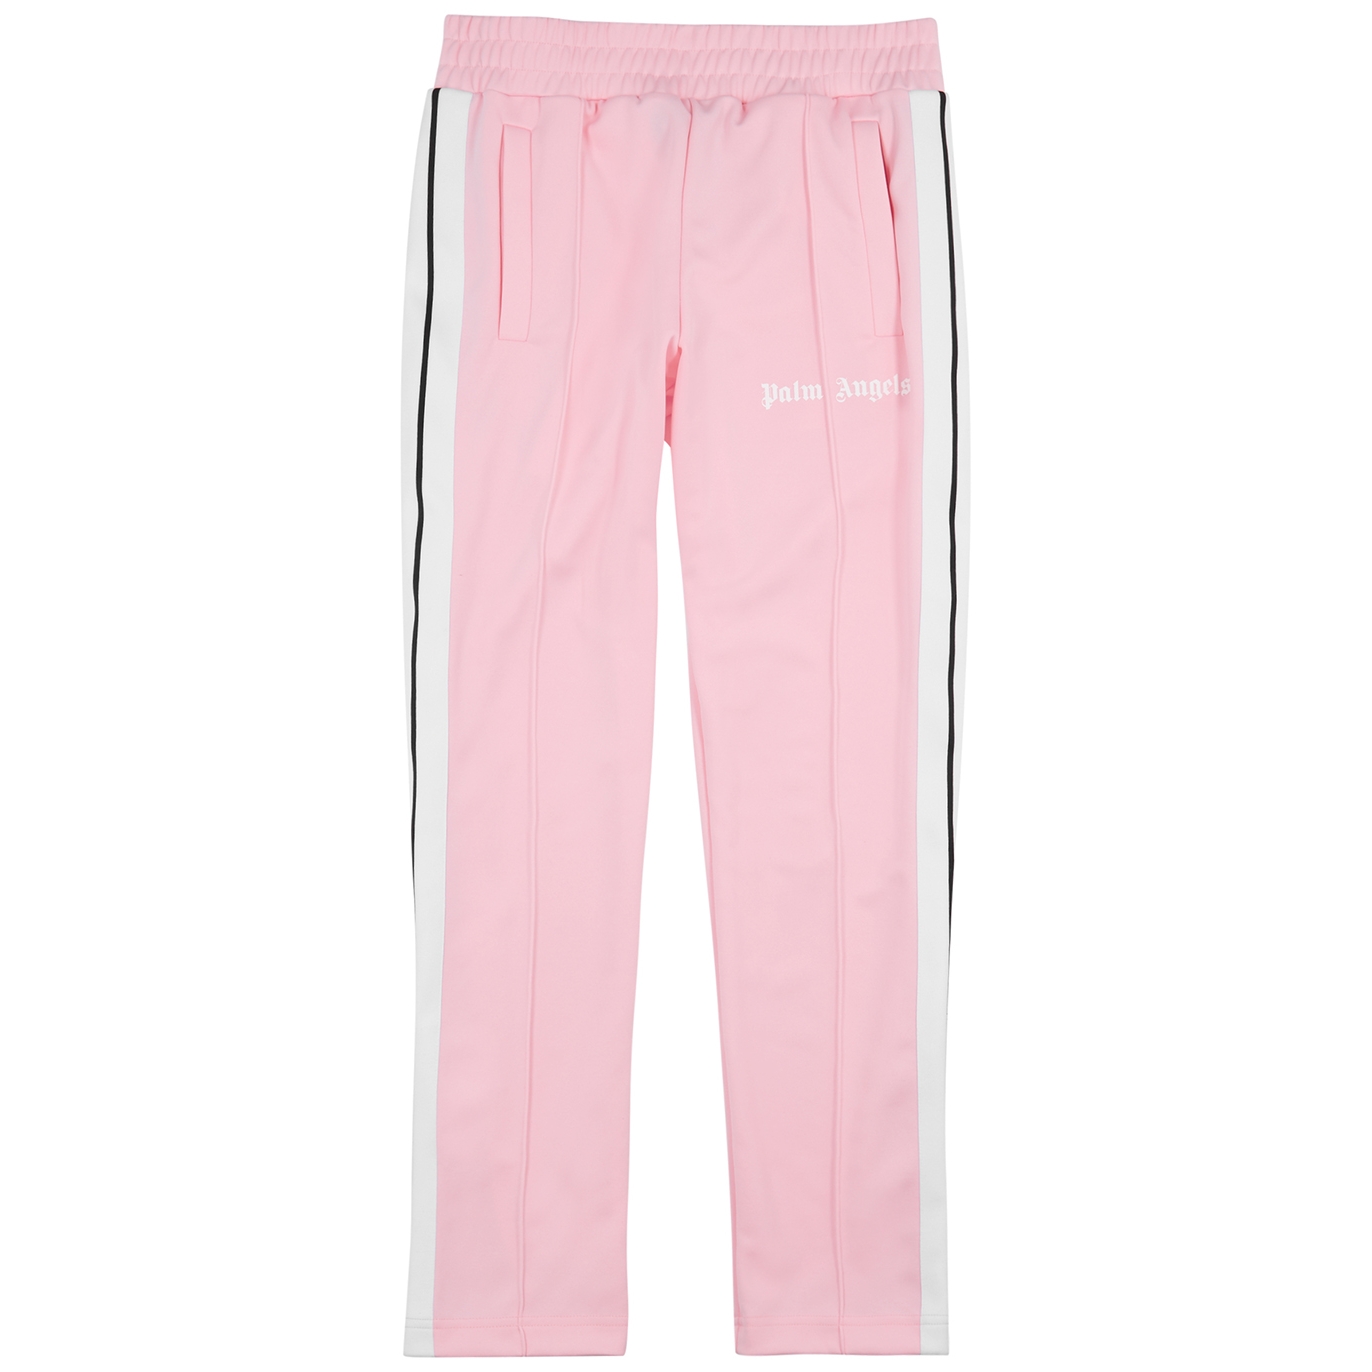 Palm Angels Pink Striped Jersey Track Pants - L